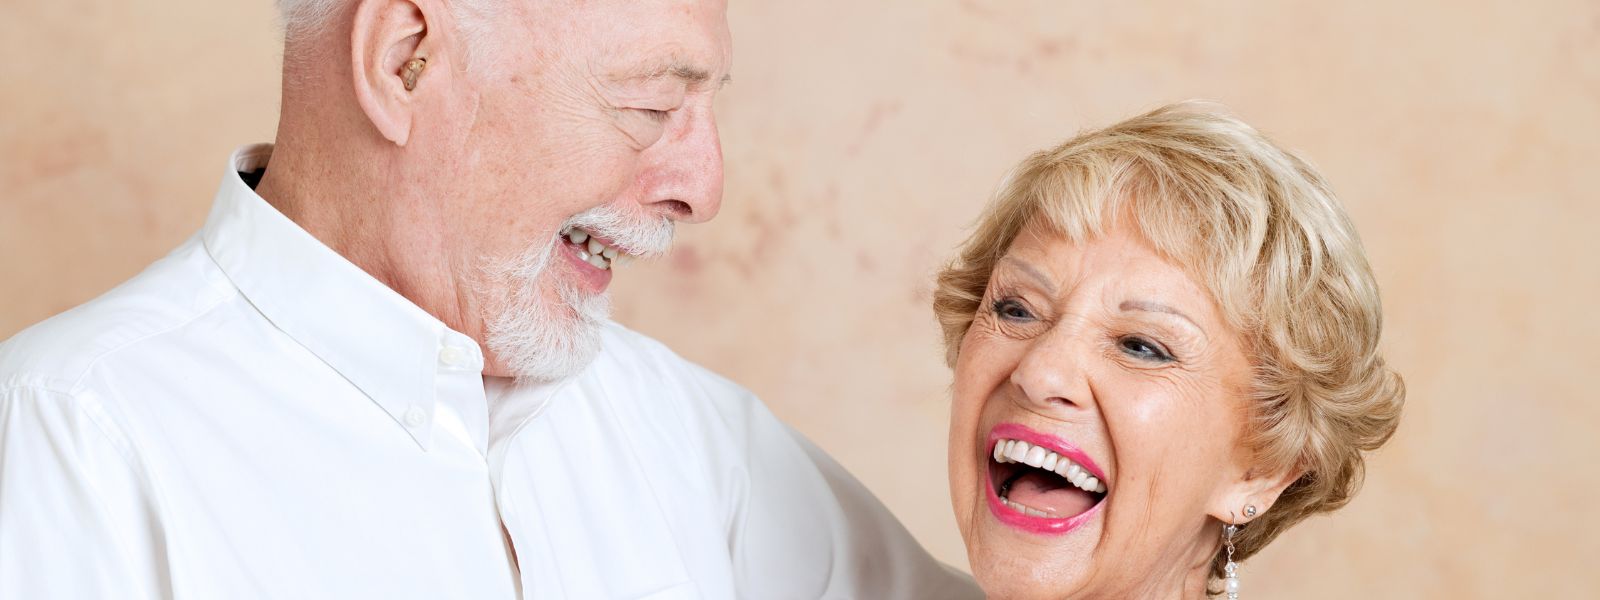 Loving elderly couple smiling happy